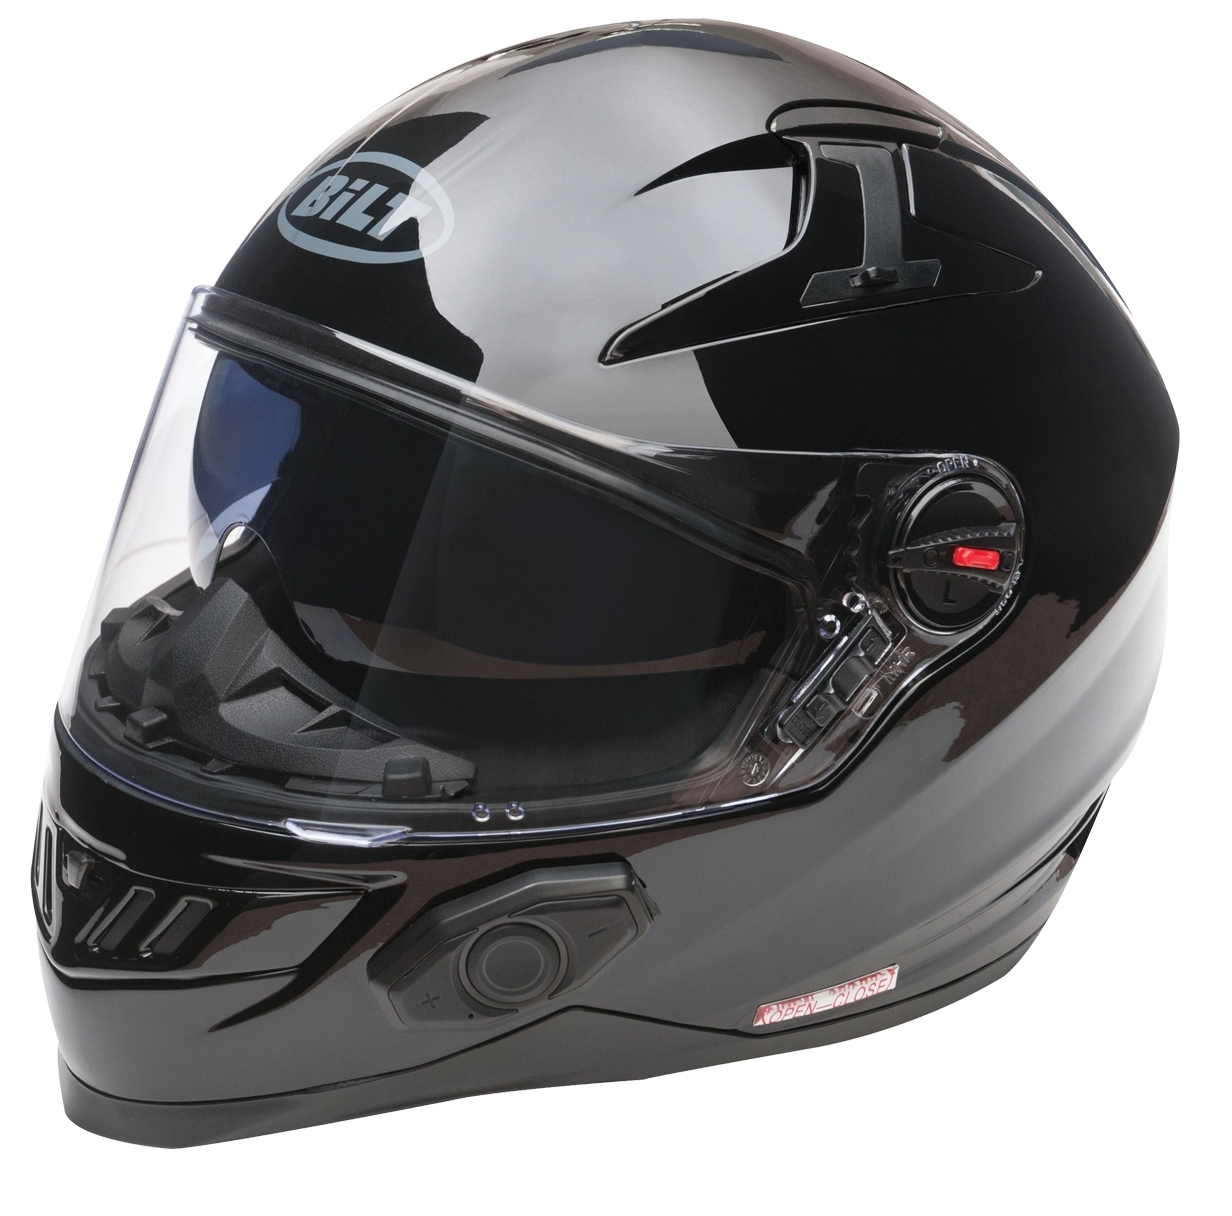 BILT Techno Bluetooth Motorcycle Helmet Review